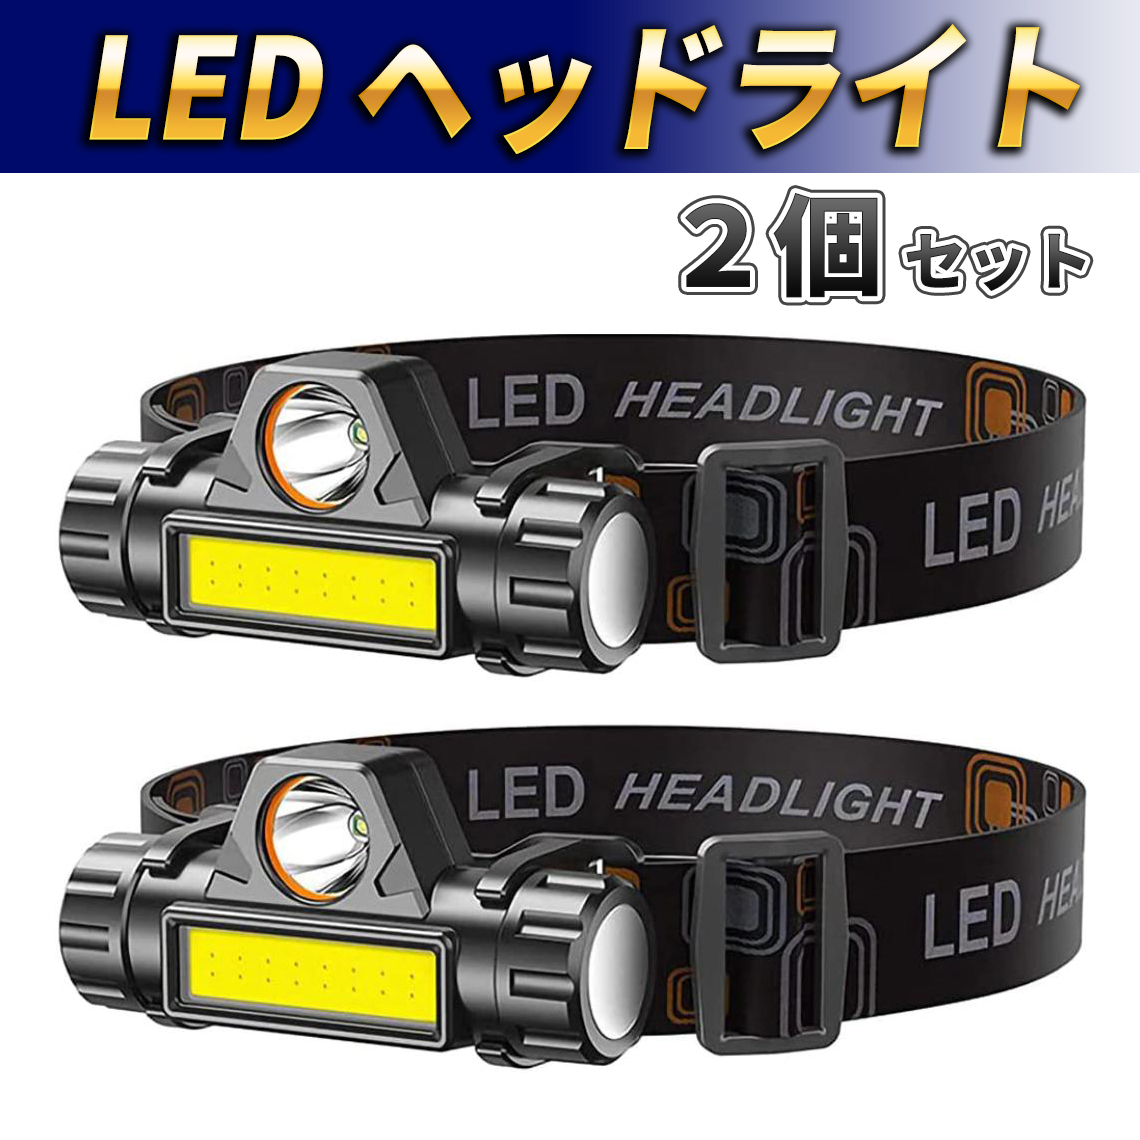 LED ヘッドライト 2個セット USB充電式 ヘッドランプ 高輝度 小型軽量 COB 懐中電灯 作業灯 ワークライト 防災 釣り 登山 キャンプ 防水の画像1